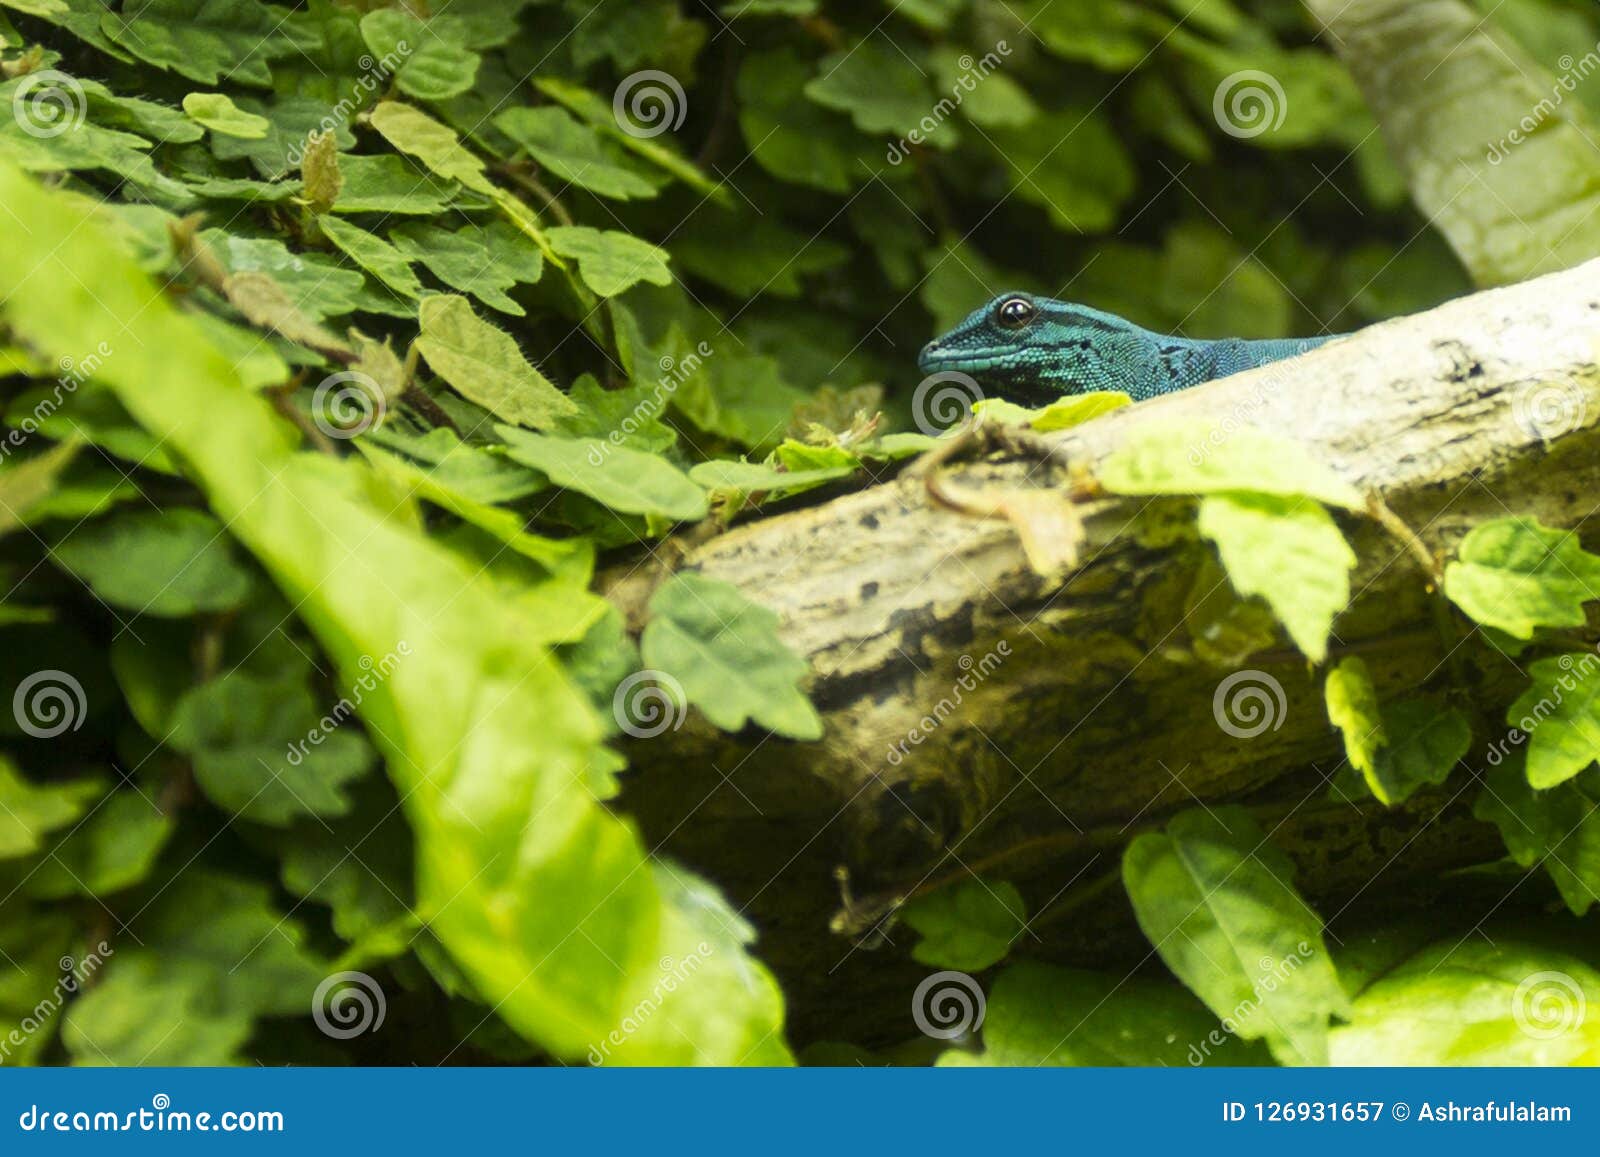 beautiful blue lizard